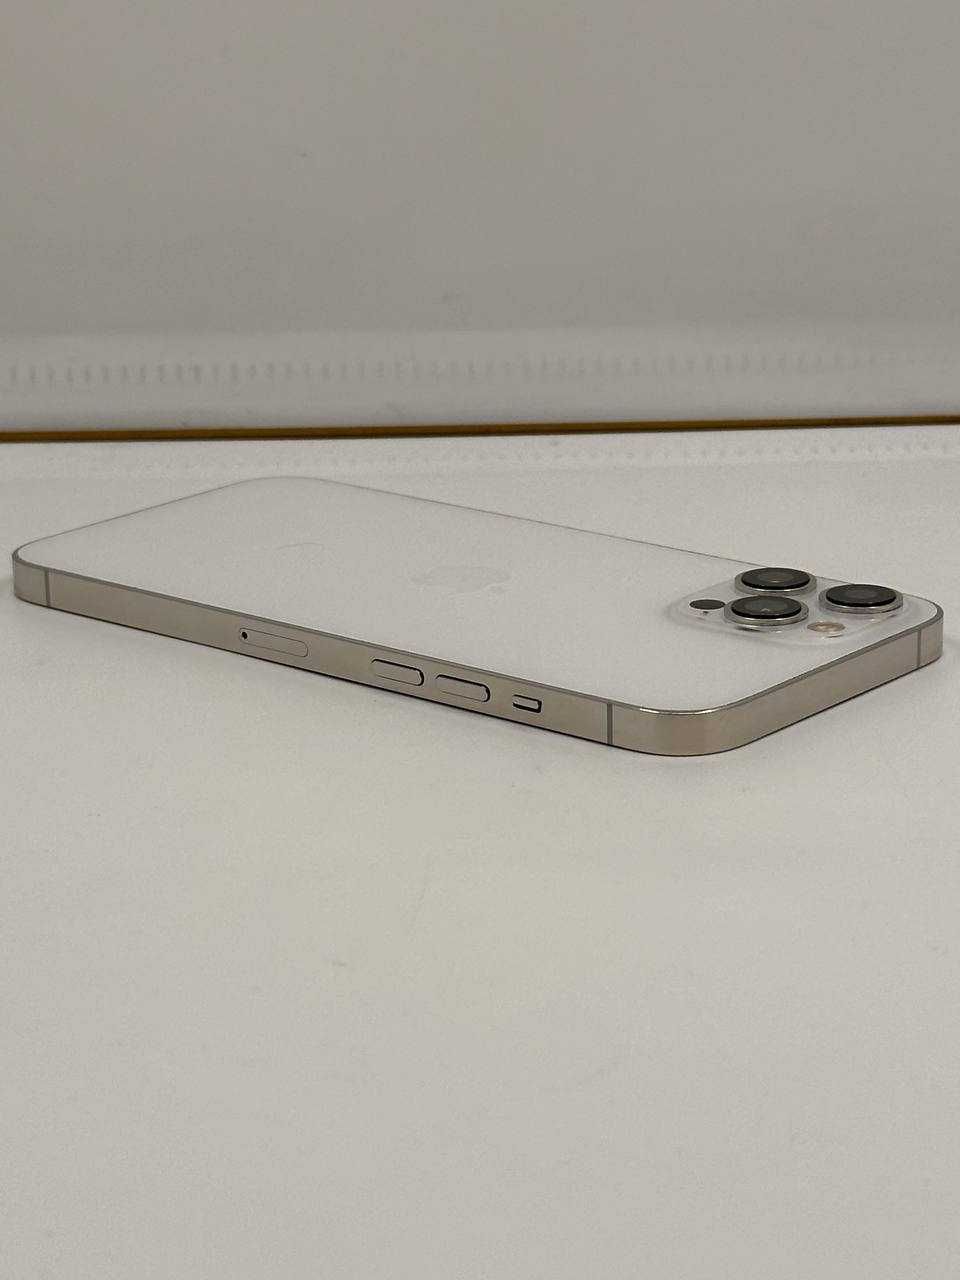 iPhone 12 Pro Max 256Gb Silver Neverlock ГАРАНТИЯ 6 Месяцев МАГАЗИН